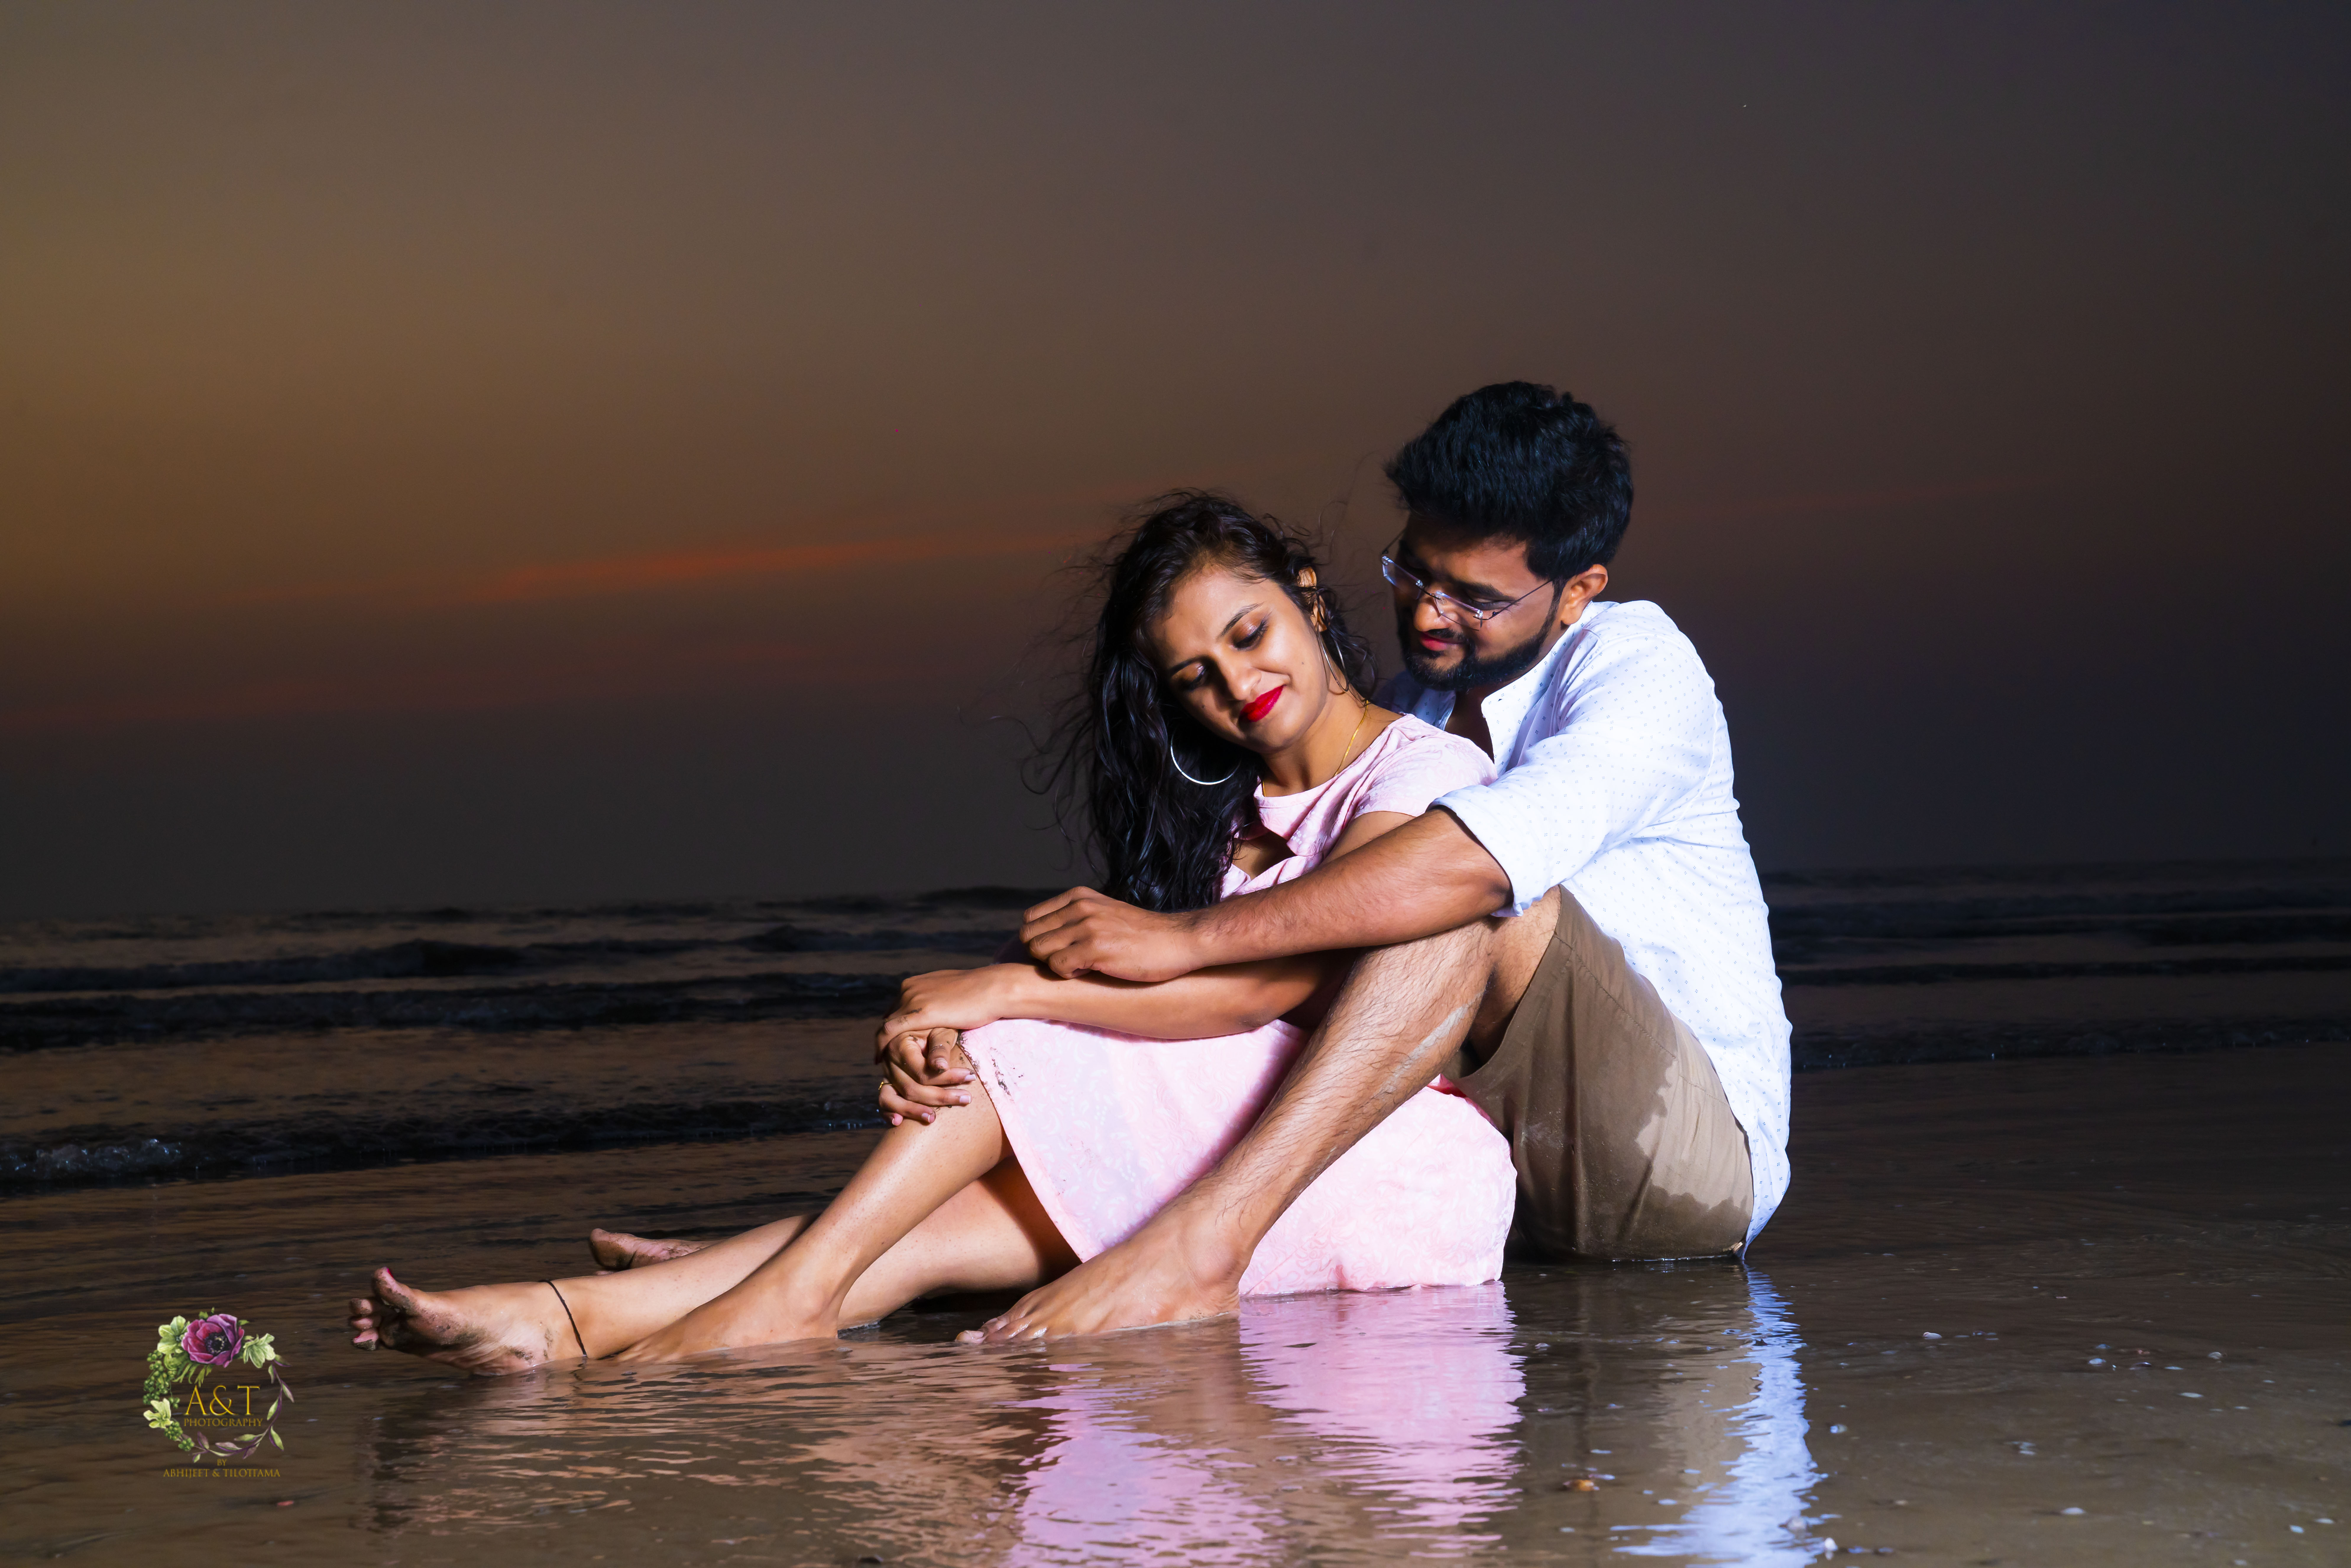 Romantic Pre-wedding Photoshoot Ideas on Beach|Photographer in Pune|Mumbai|India